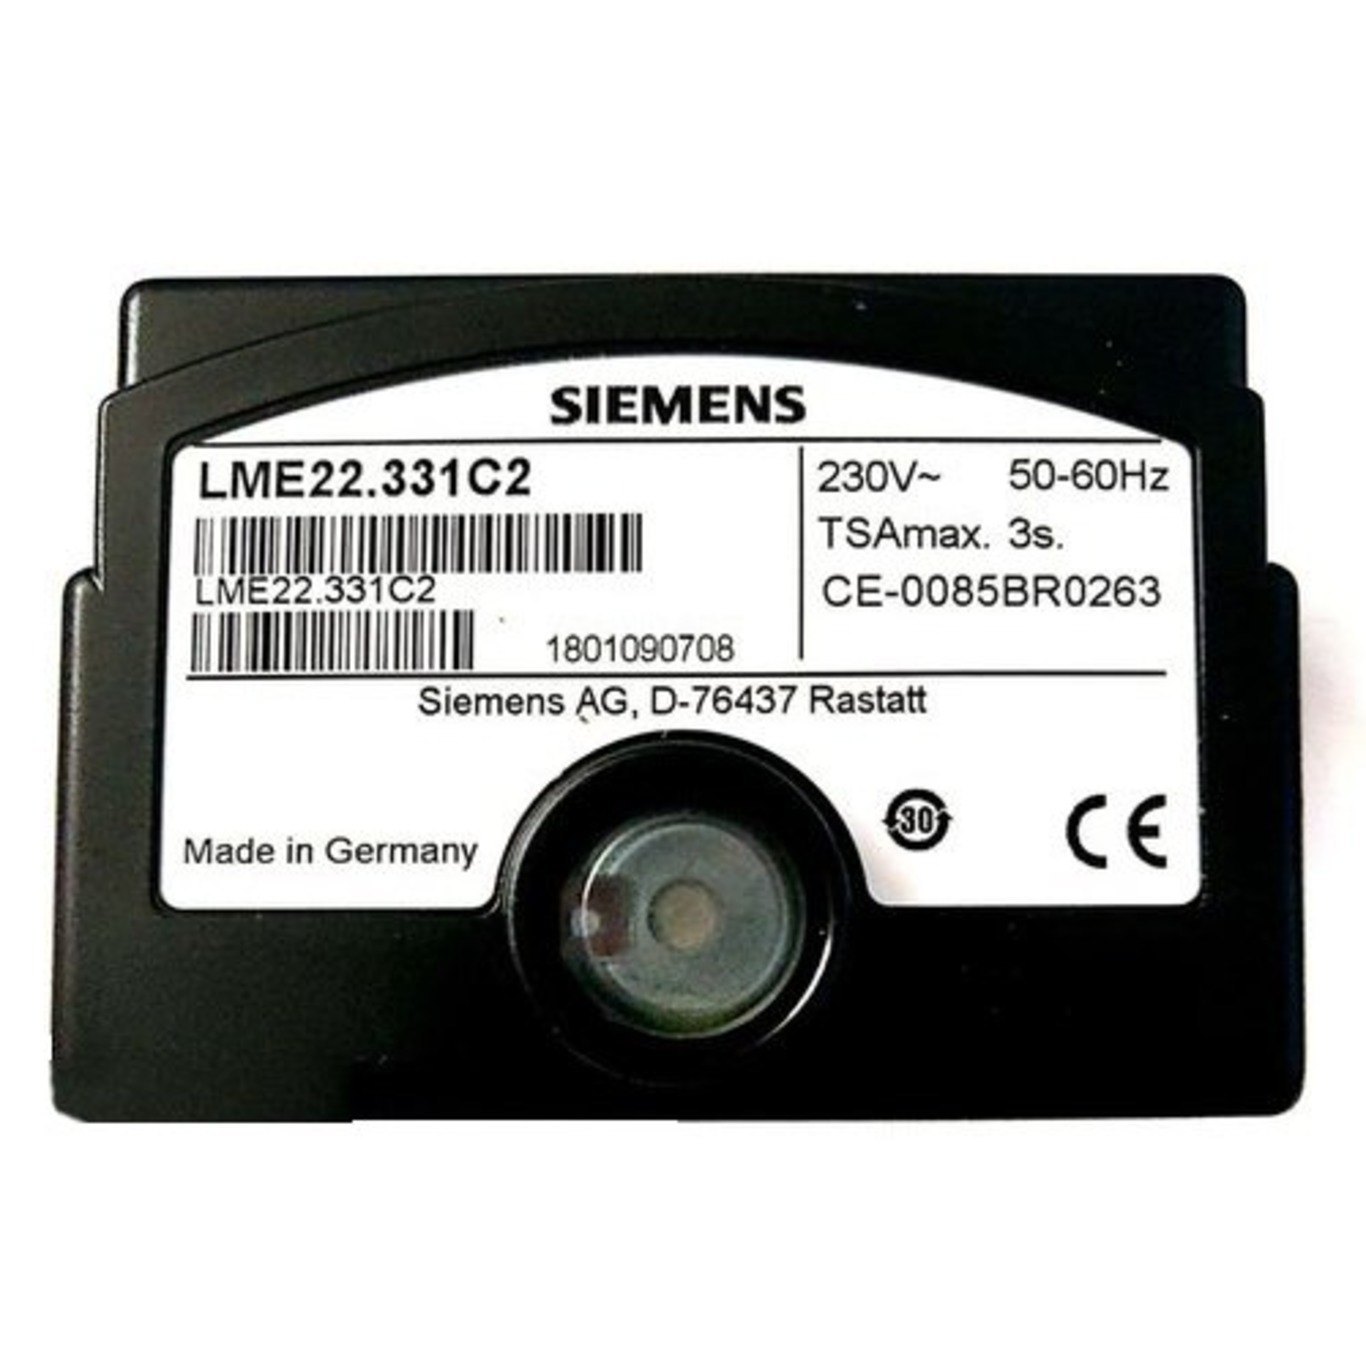 Siemens LME22.331C2 burner control